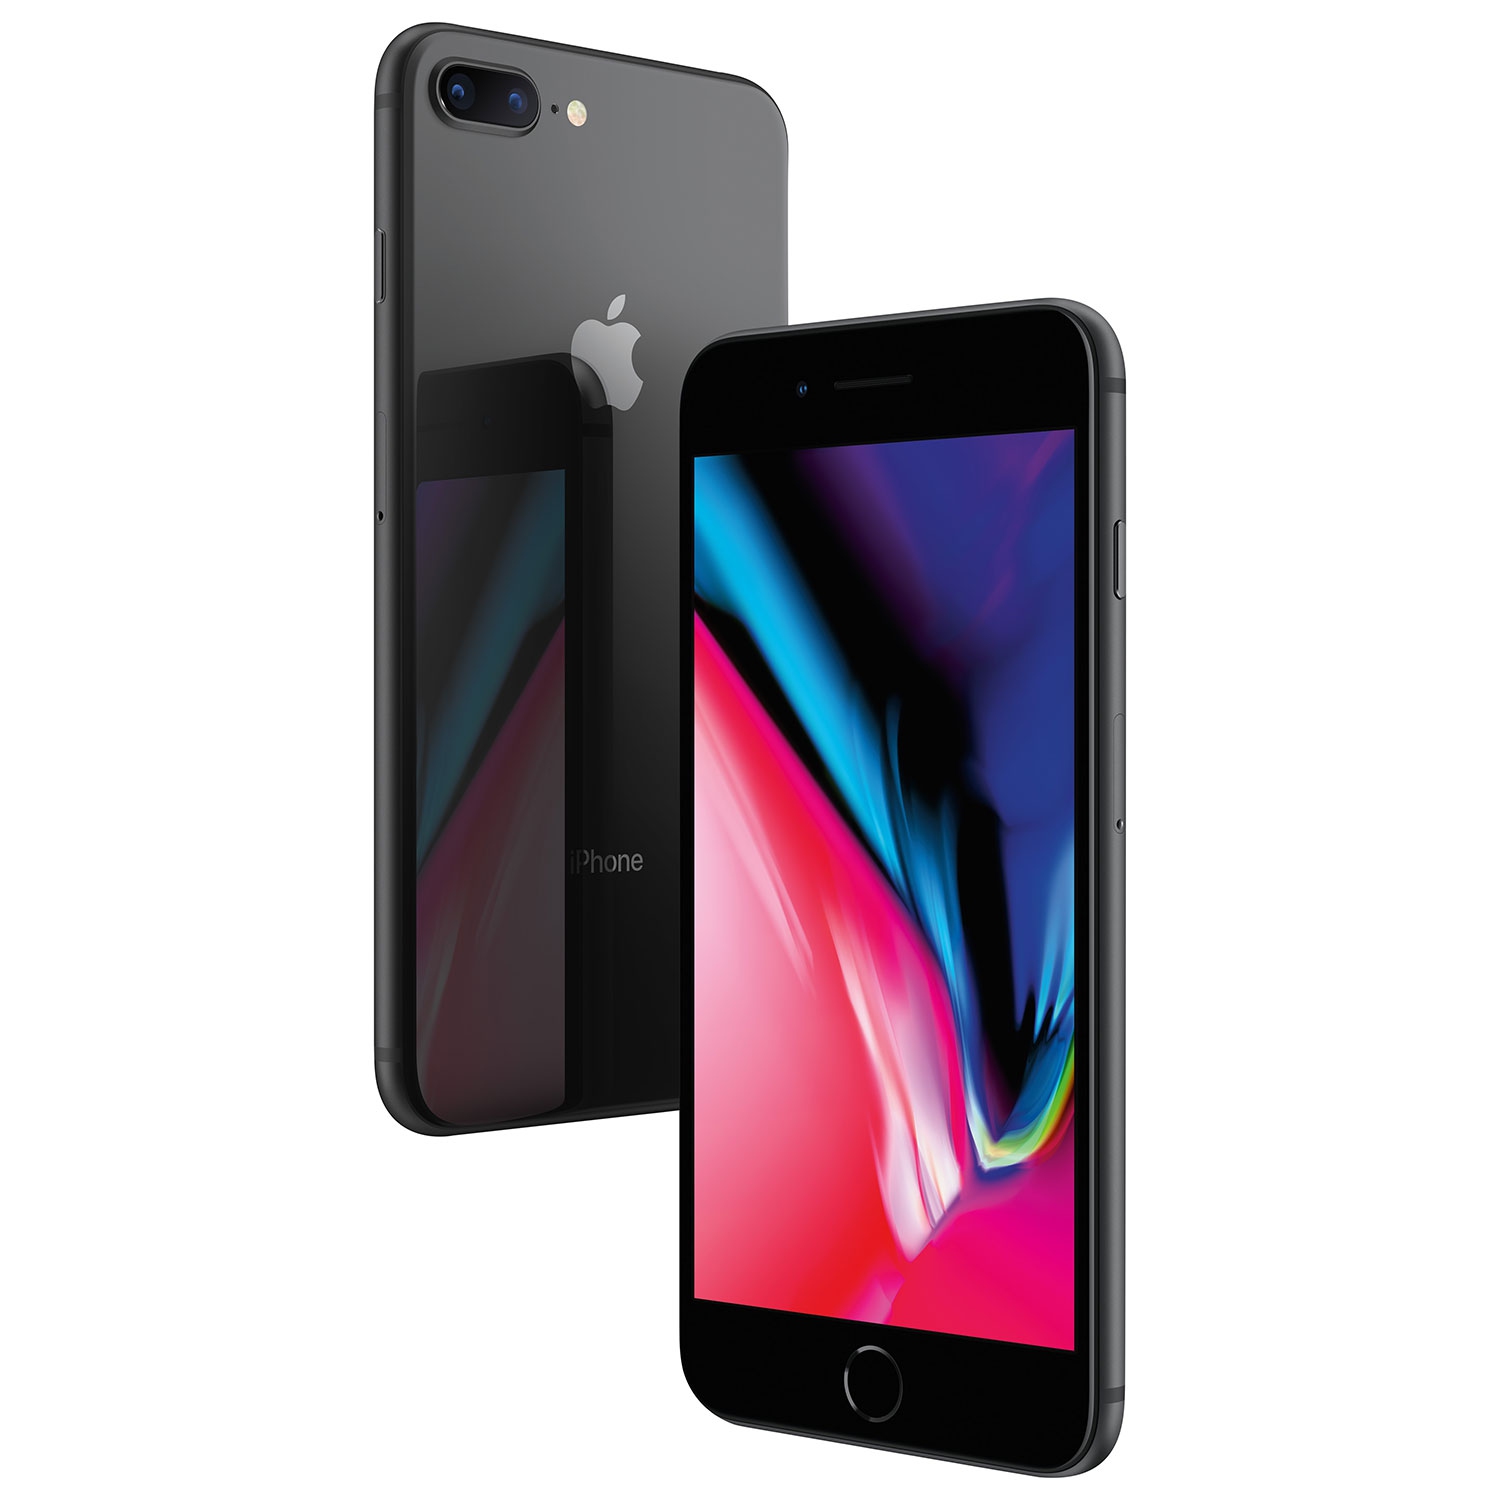 Refurbished (Excellent) - Apple iPhone 8 Plus 64GB Smartphone - Space Gray - Unlocked - Certified Refurbished